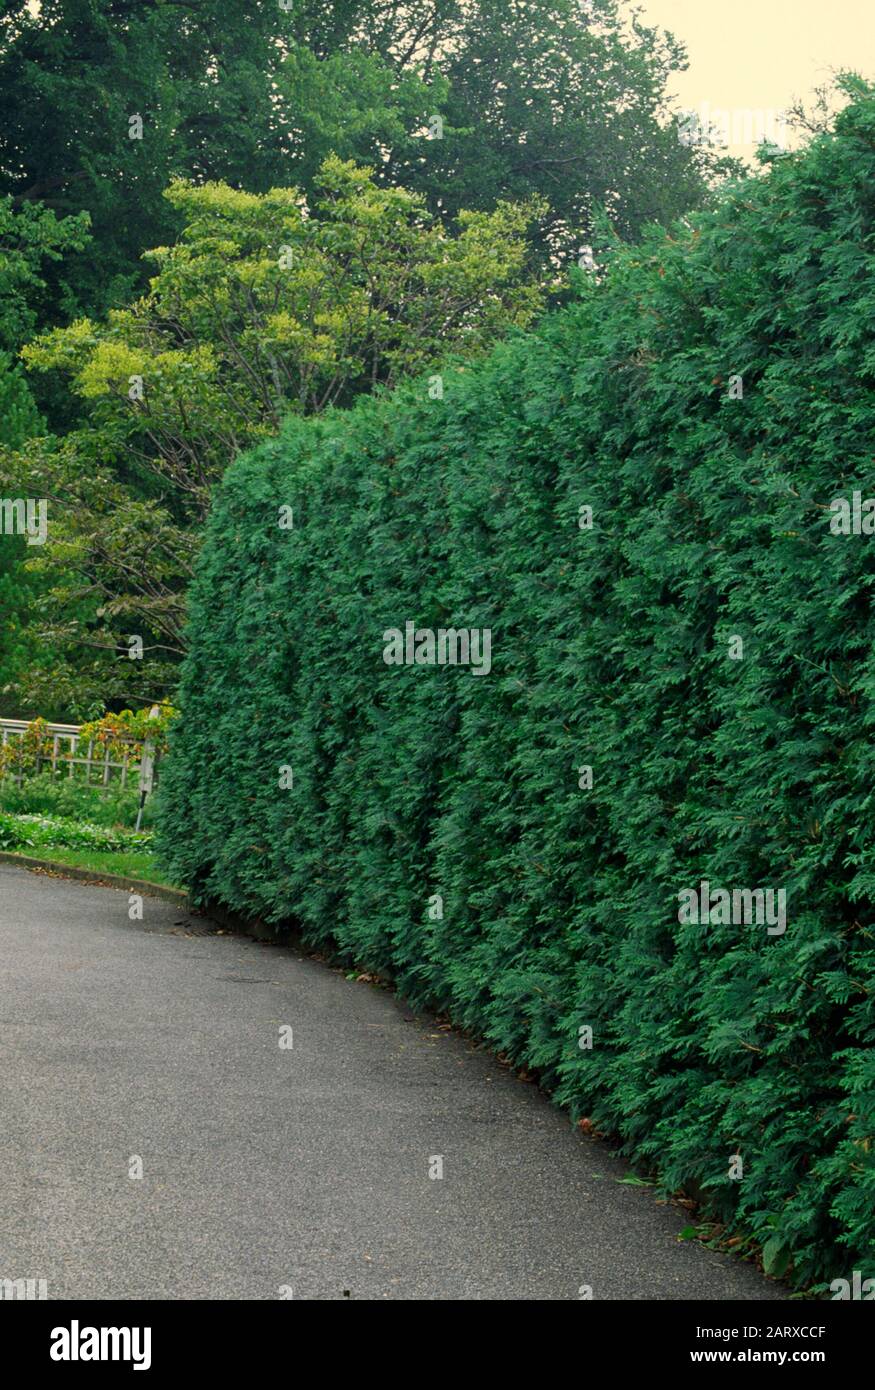 Thuja hedge, Arborvitae, privacy Stock Photo